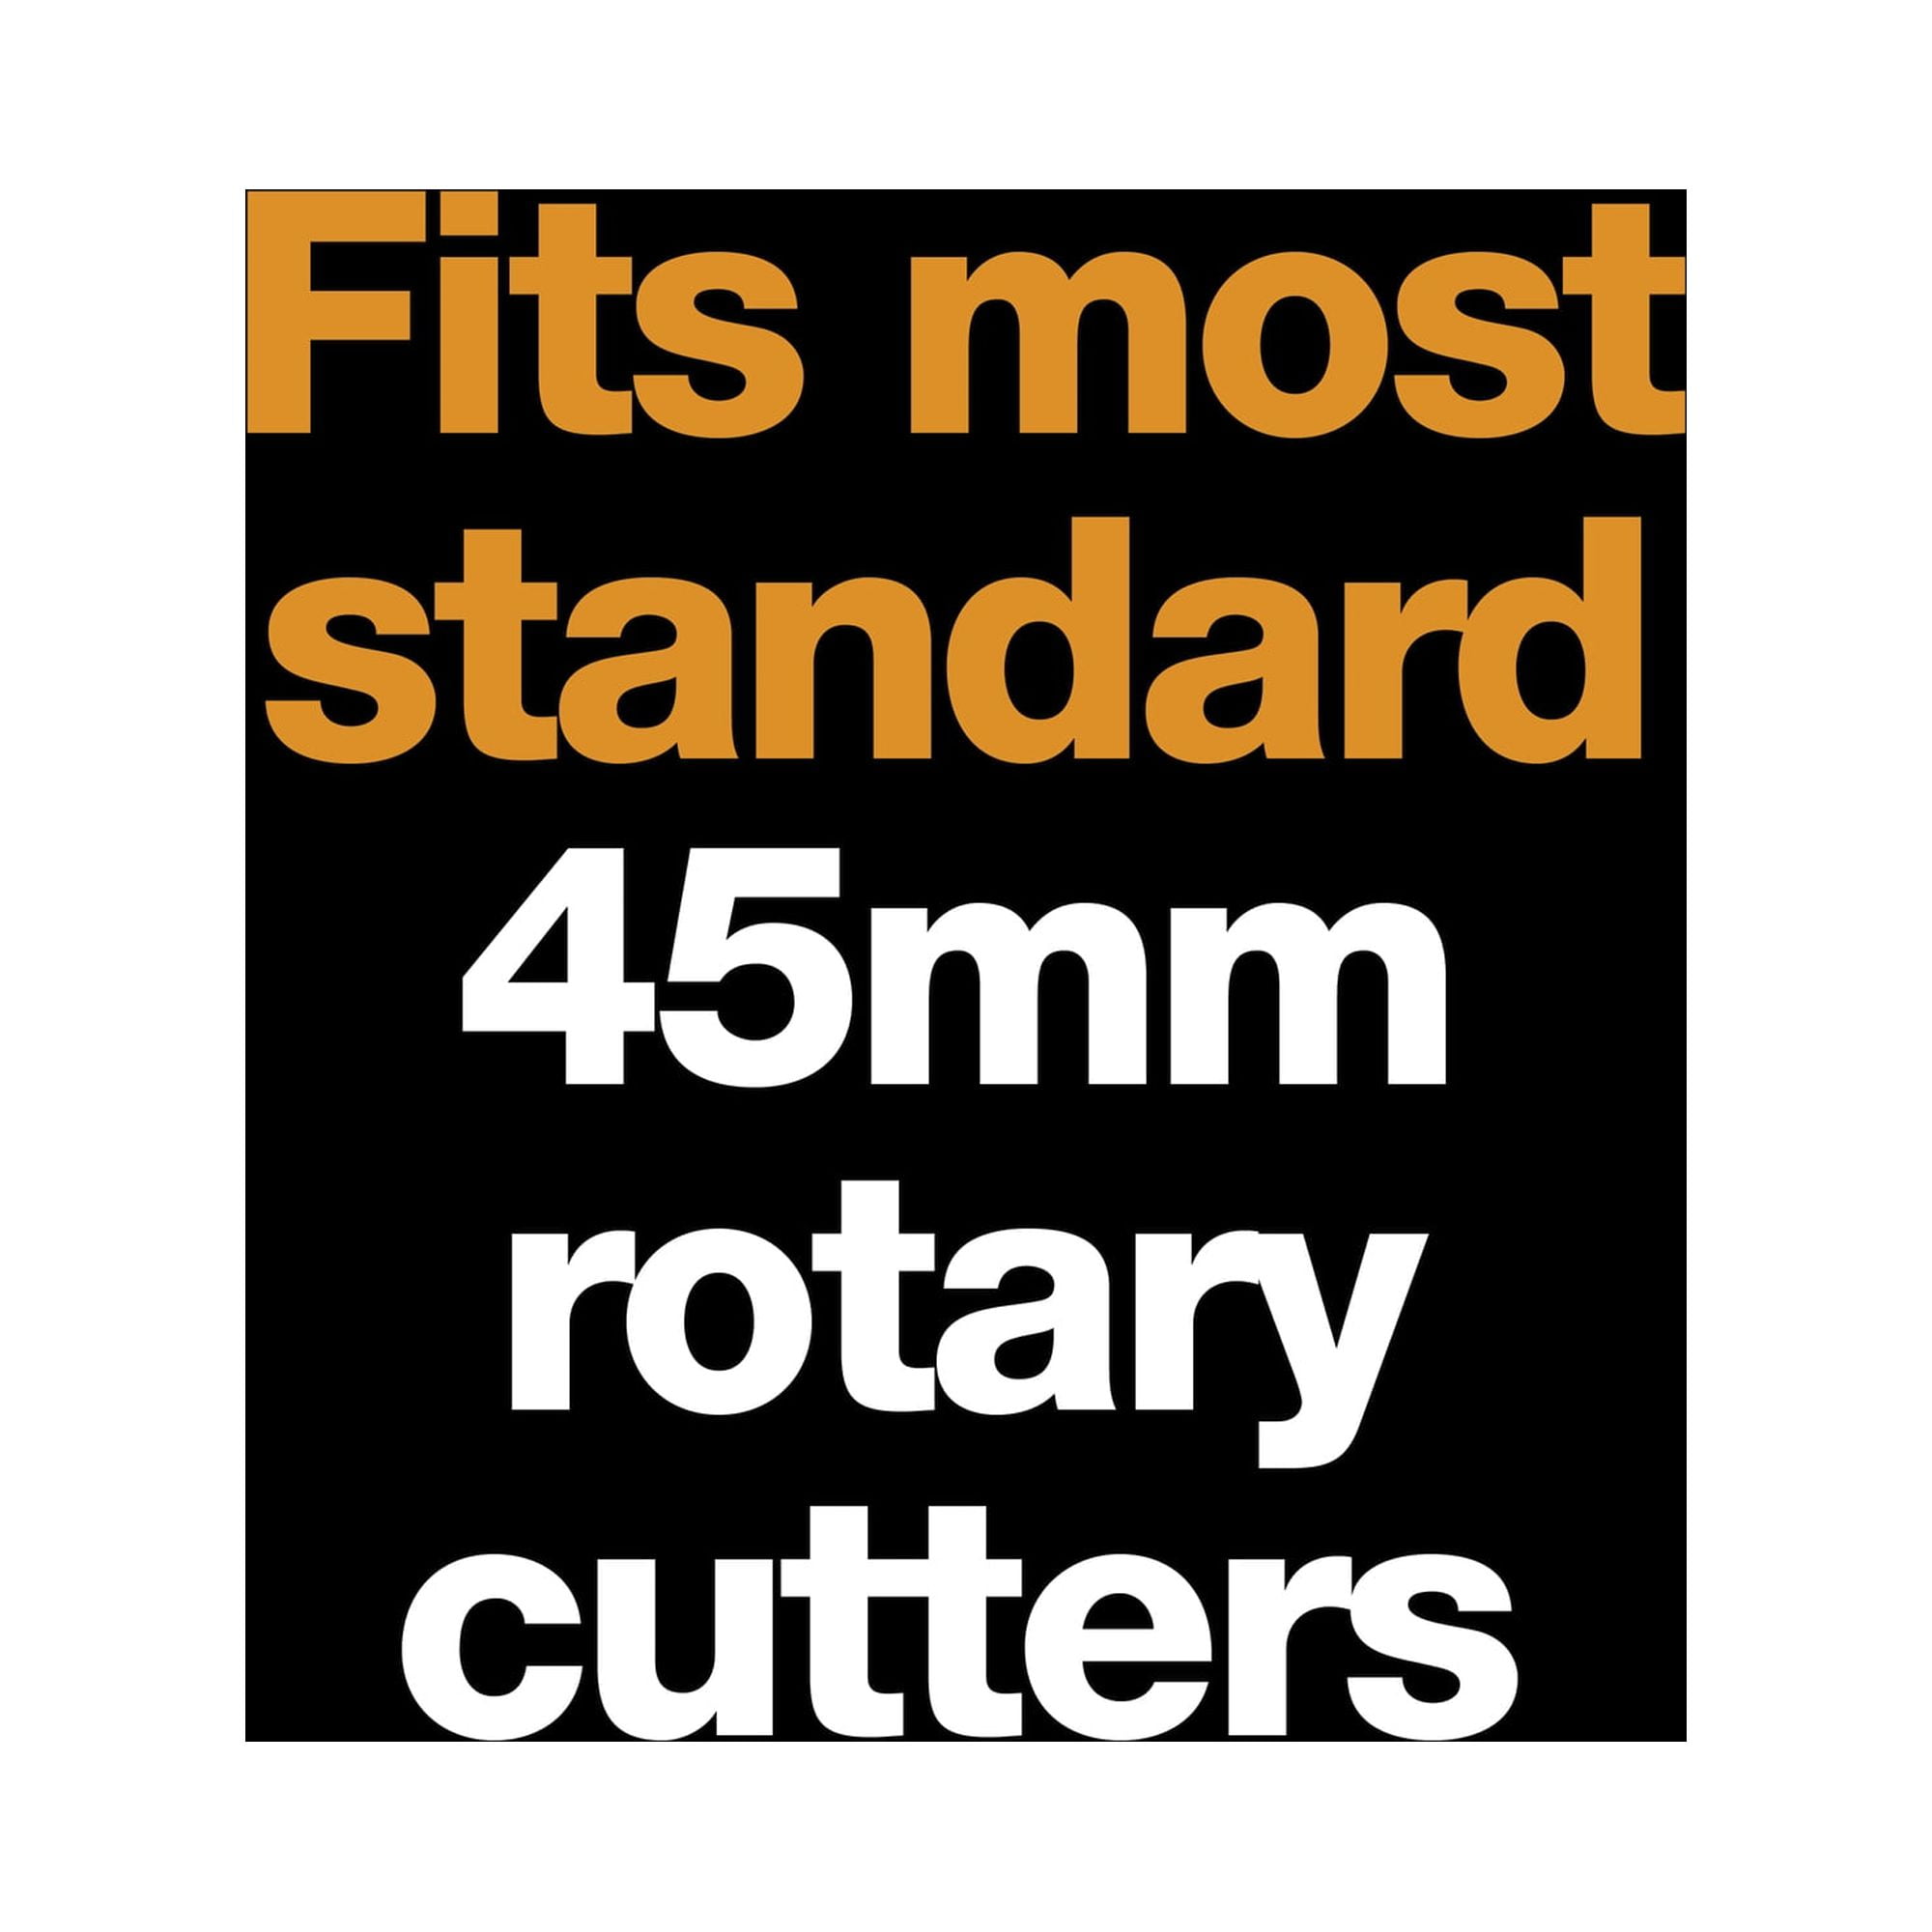 Fiskars 45mm Perforating Rotary Blade - 1pk